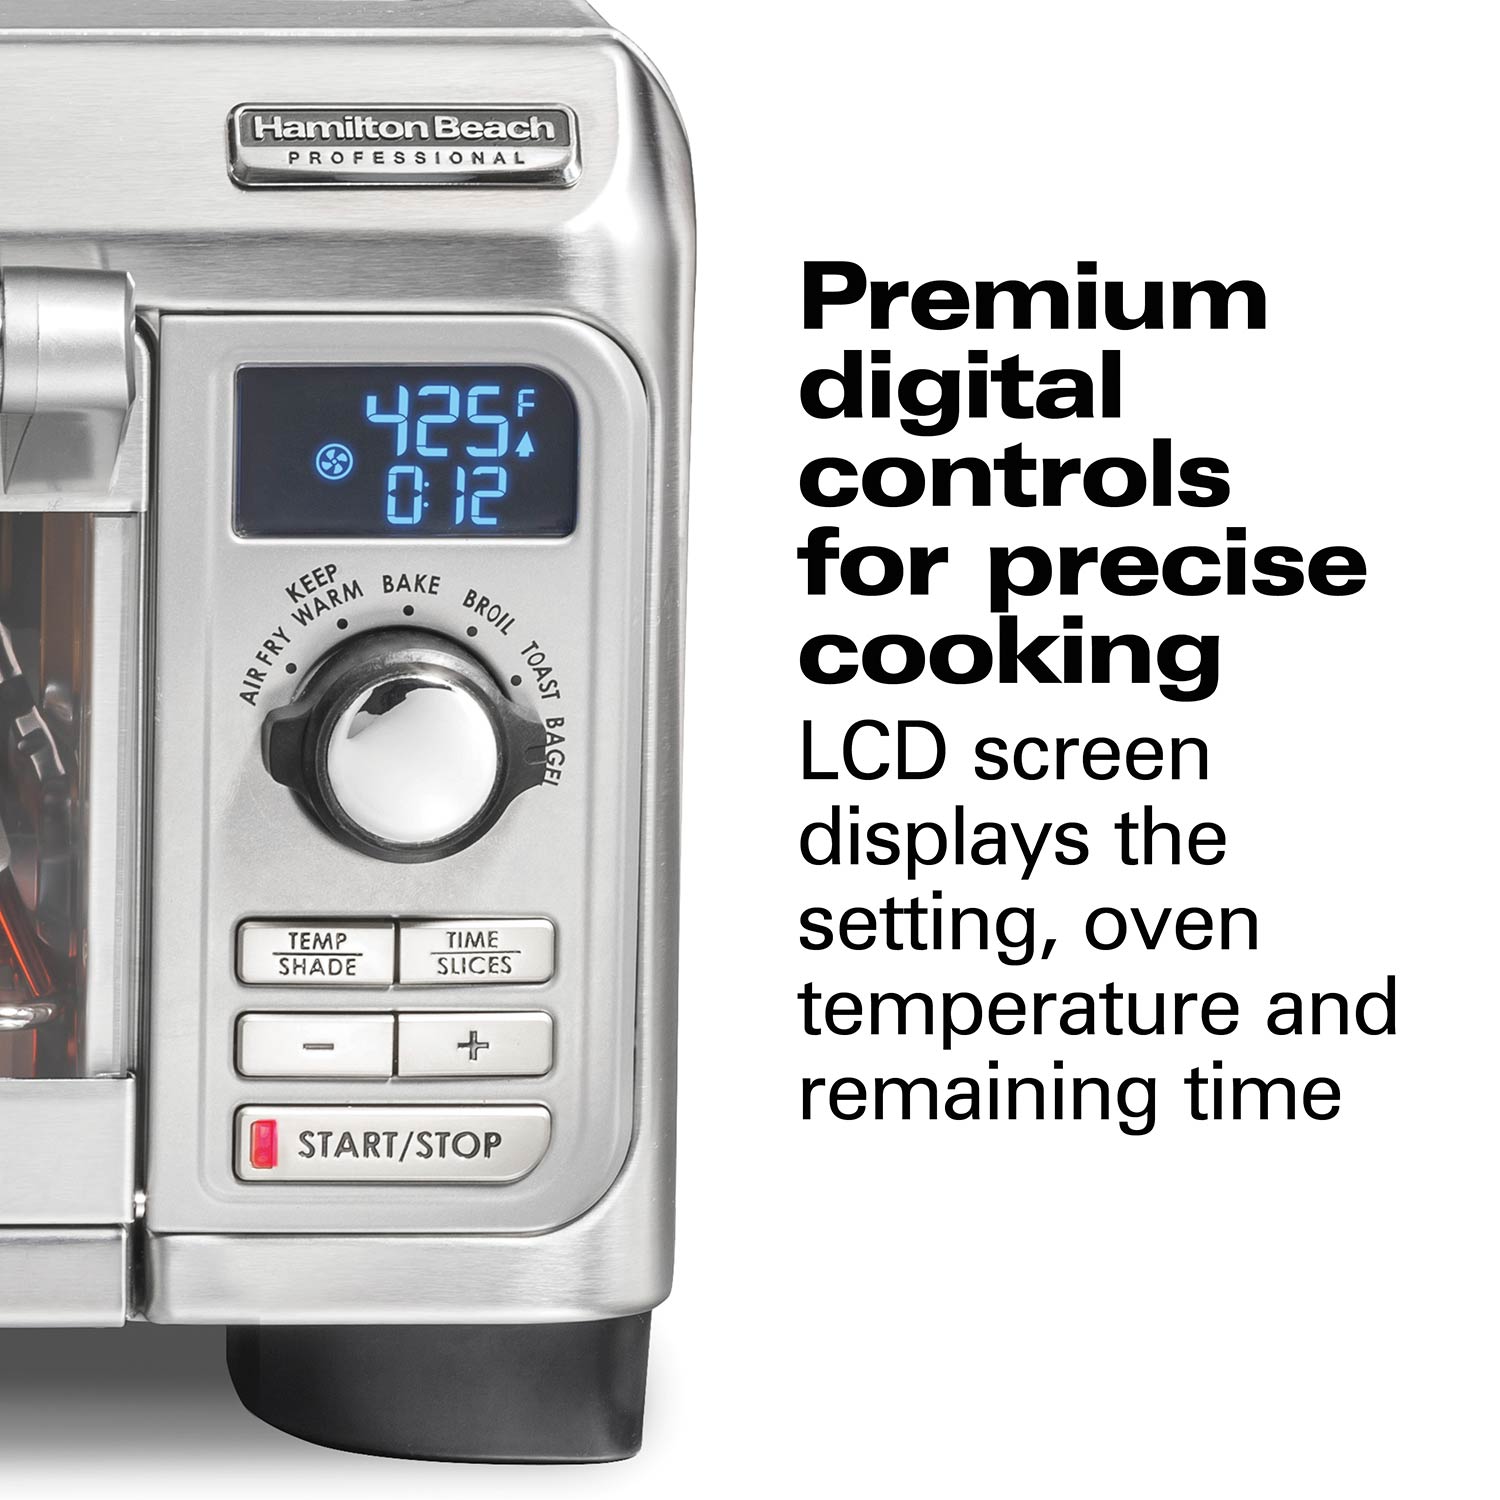 Hamilton Beach Hamilton Beach® Professional Sure-Crisp® Digital Air Fryer  Countertop Oven - 31243